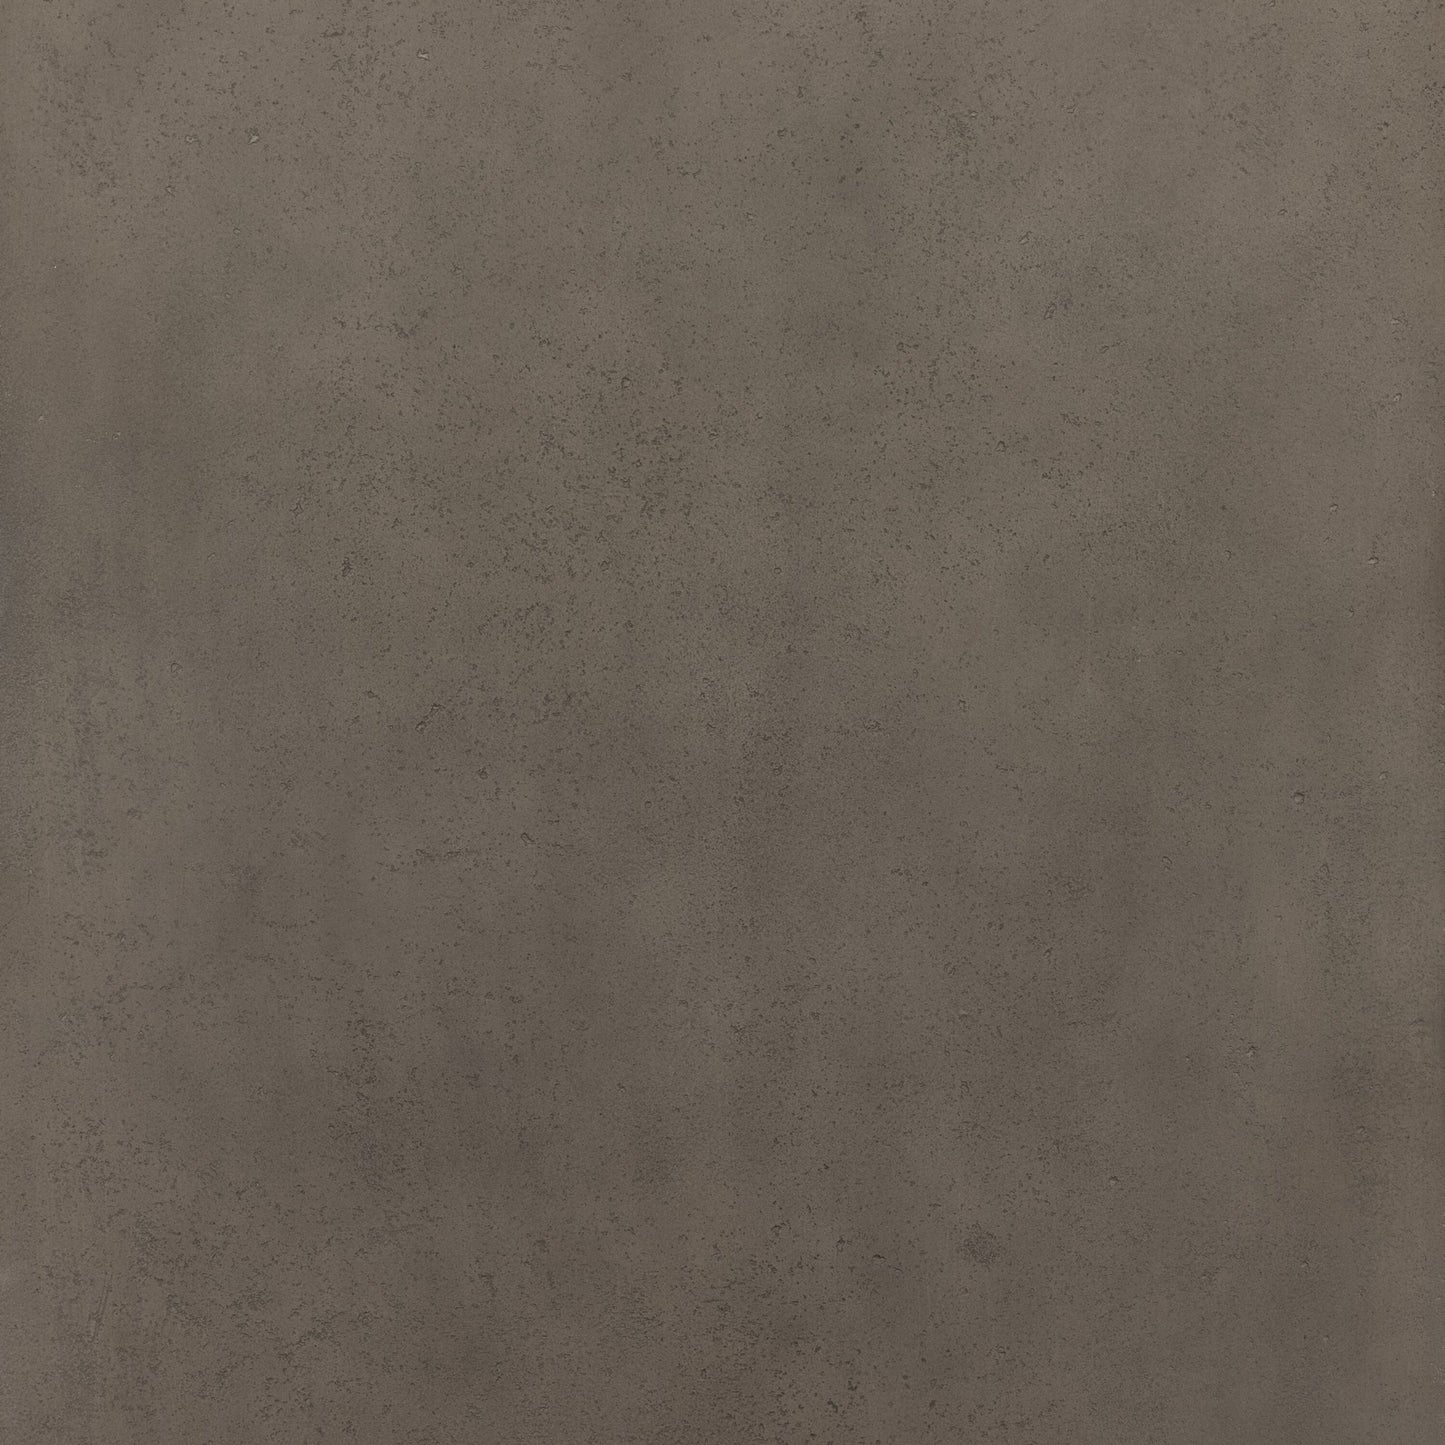 Faro coffee table-dark grey concrete